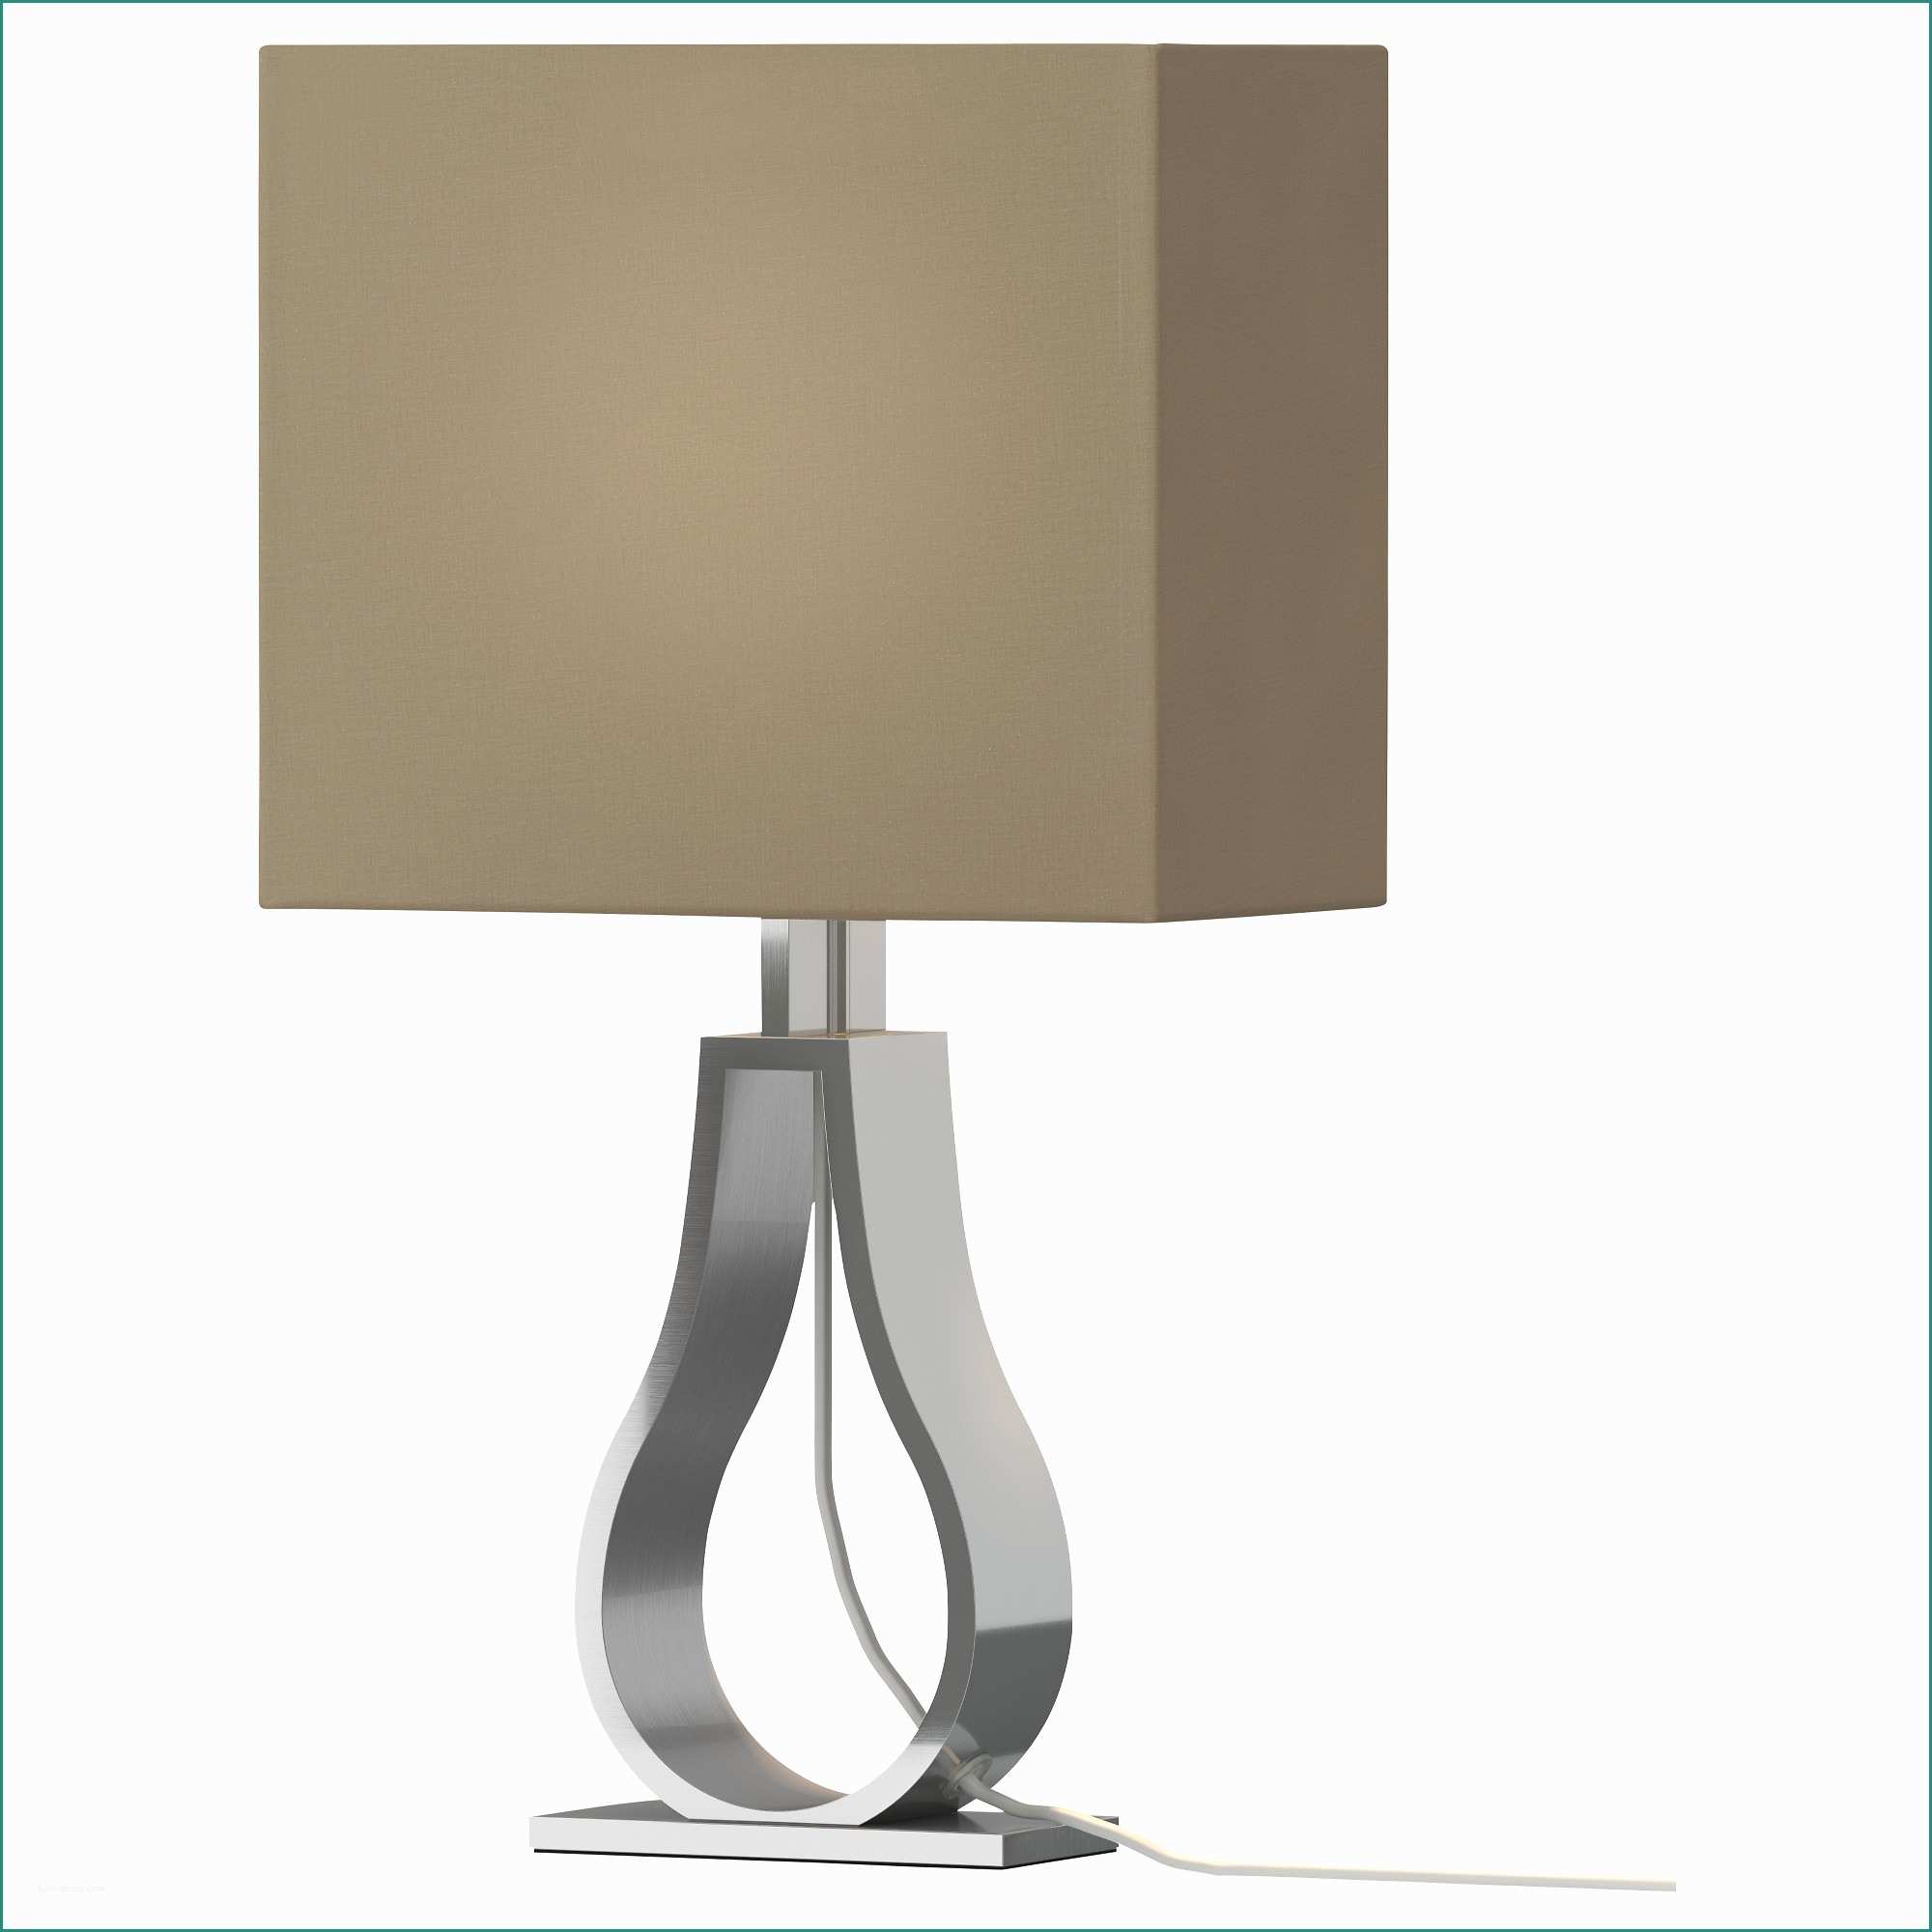 Illuminazione Giardino Leroy Merlin E Lampada Tavolo Led Ikea Windell = Tavolo Design E Arredamento